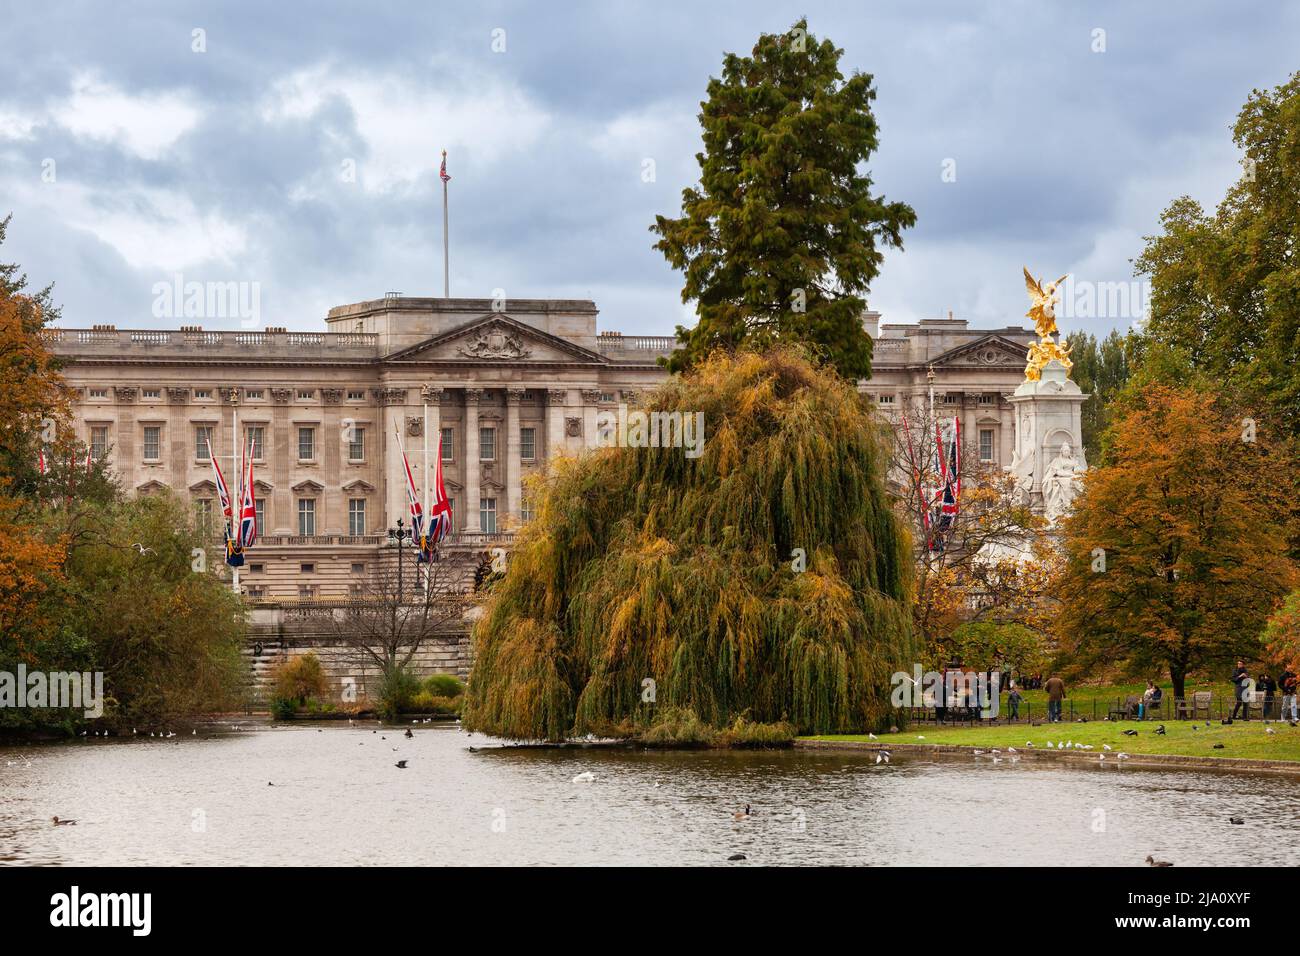 Londra, Regno Unito - 29 ottobre 2012: Buckingham Palace e Victoria Memorial visti dal St James's Park Foto Stock